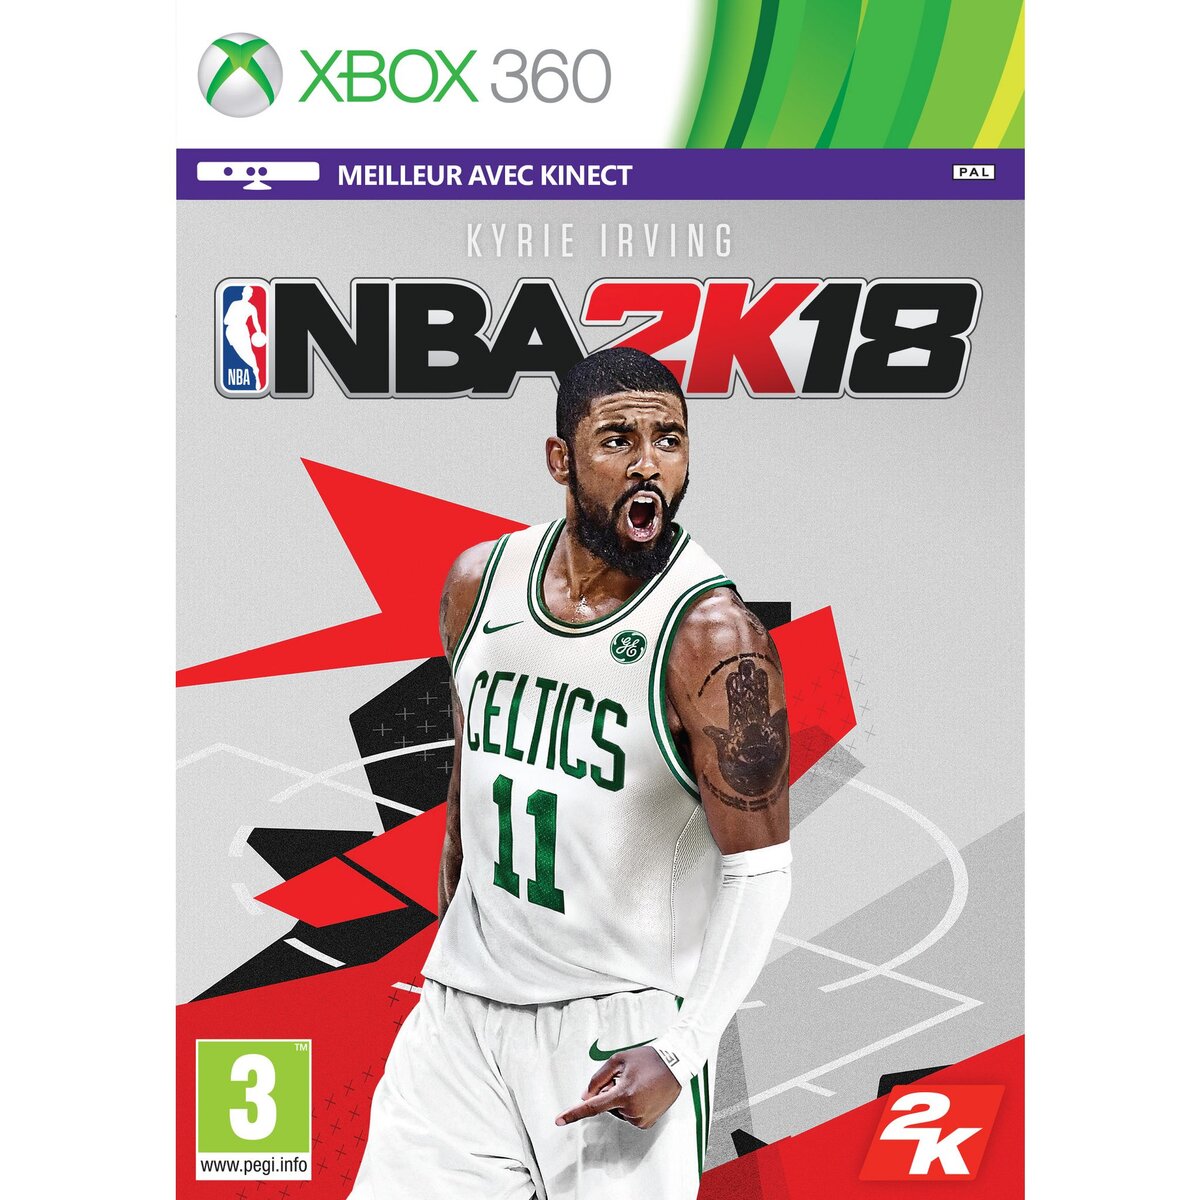 NBA 2K18 XBOX 360